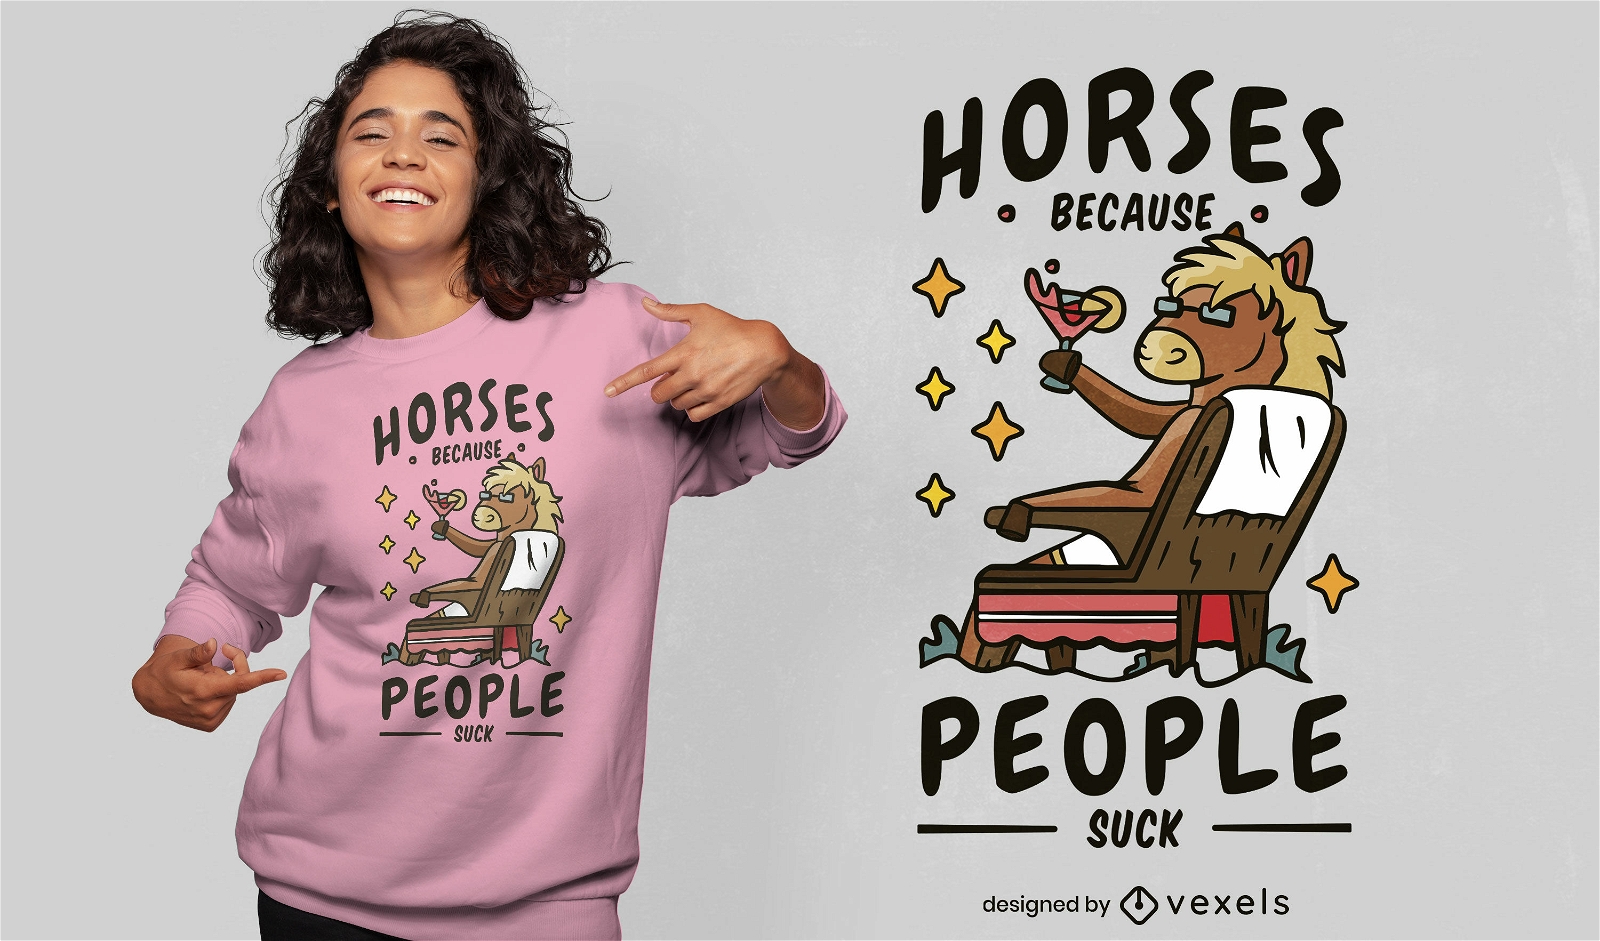 Funny horses quote t-shirt design